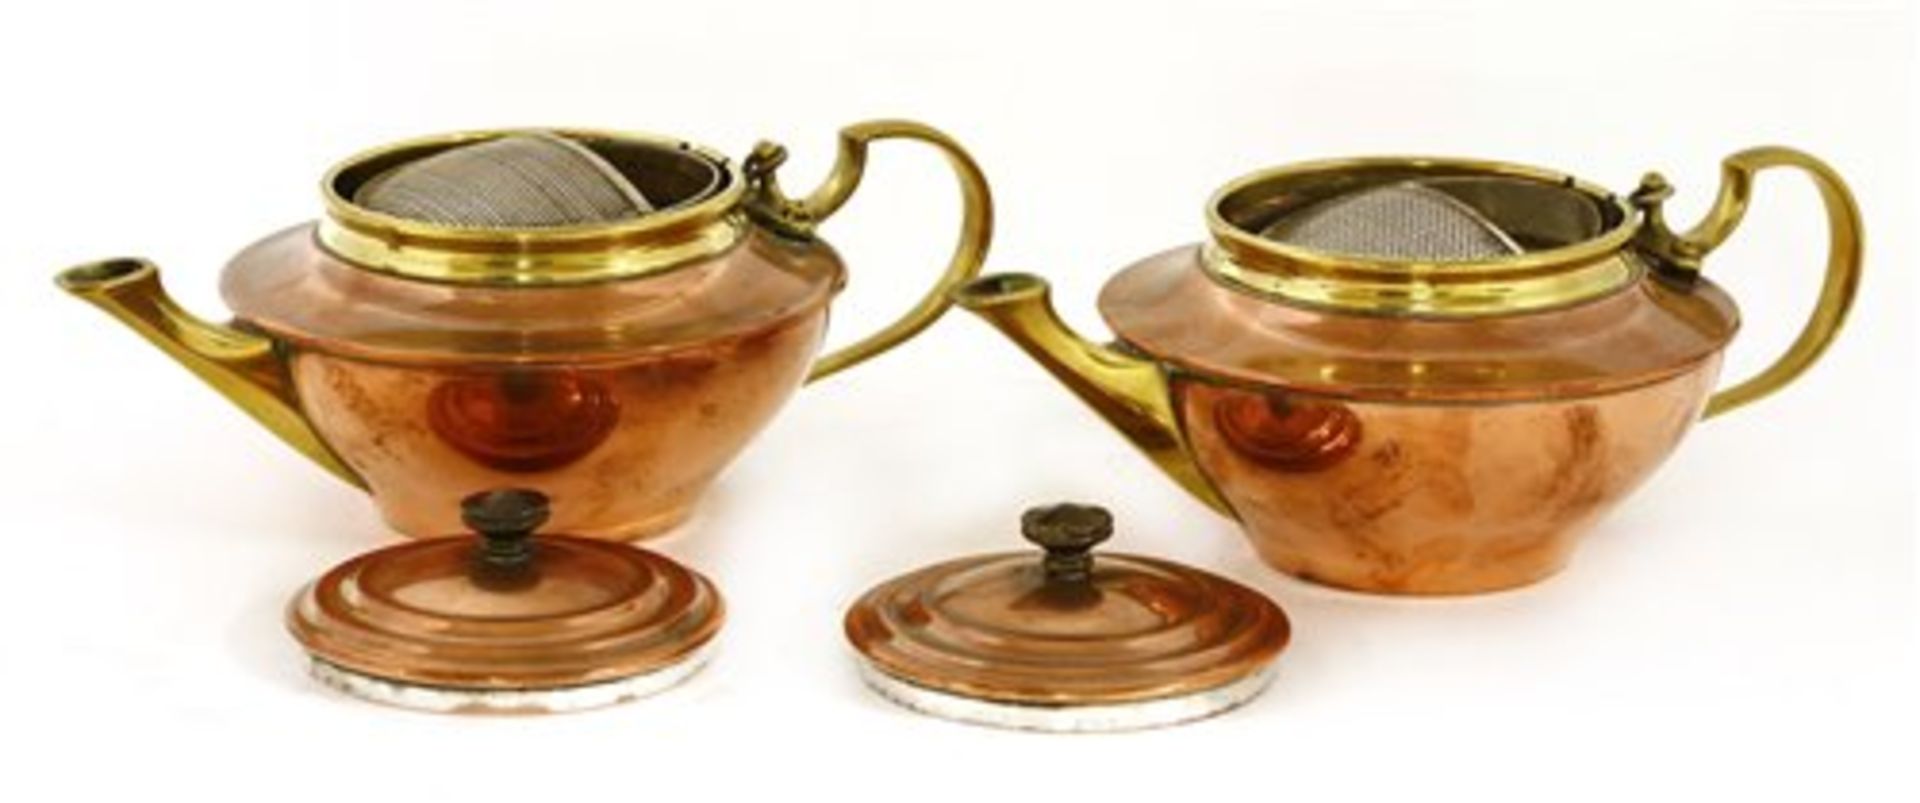 Two copper and brass teapots - Bild 2 aus 2